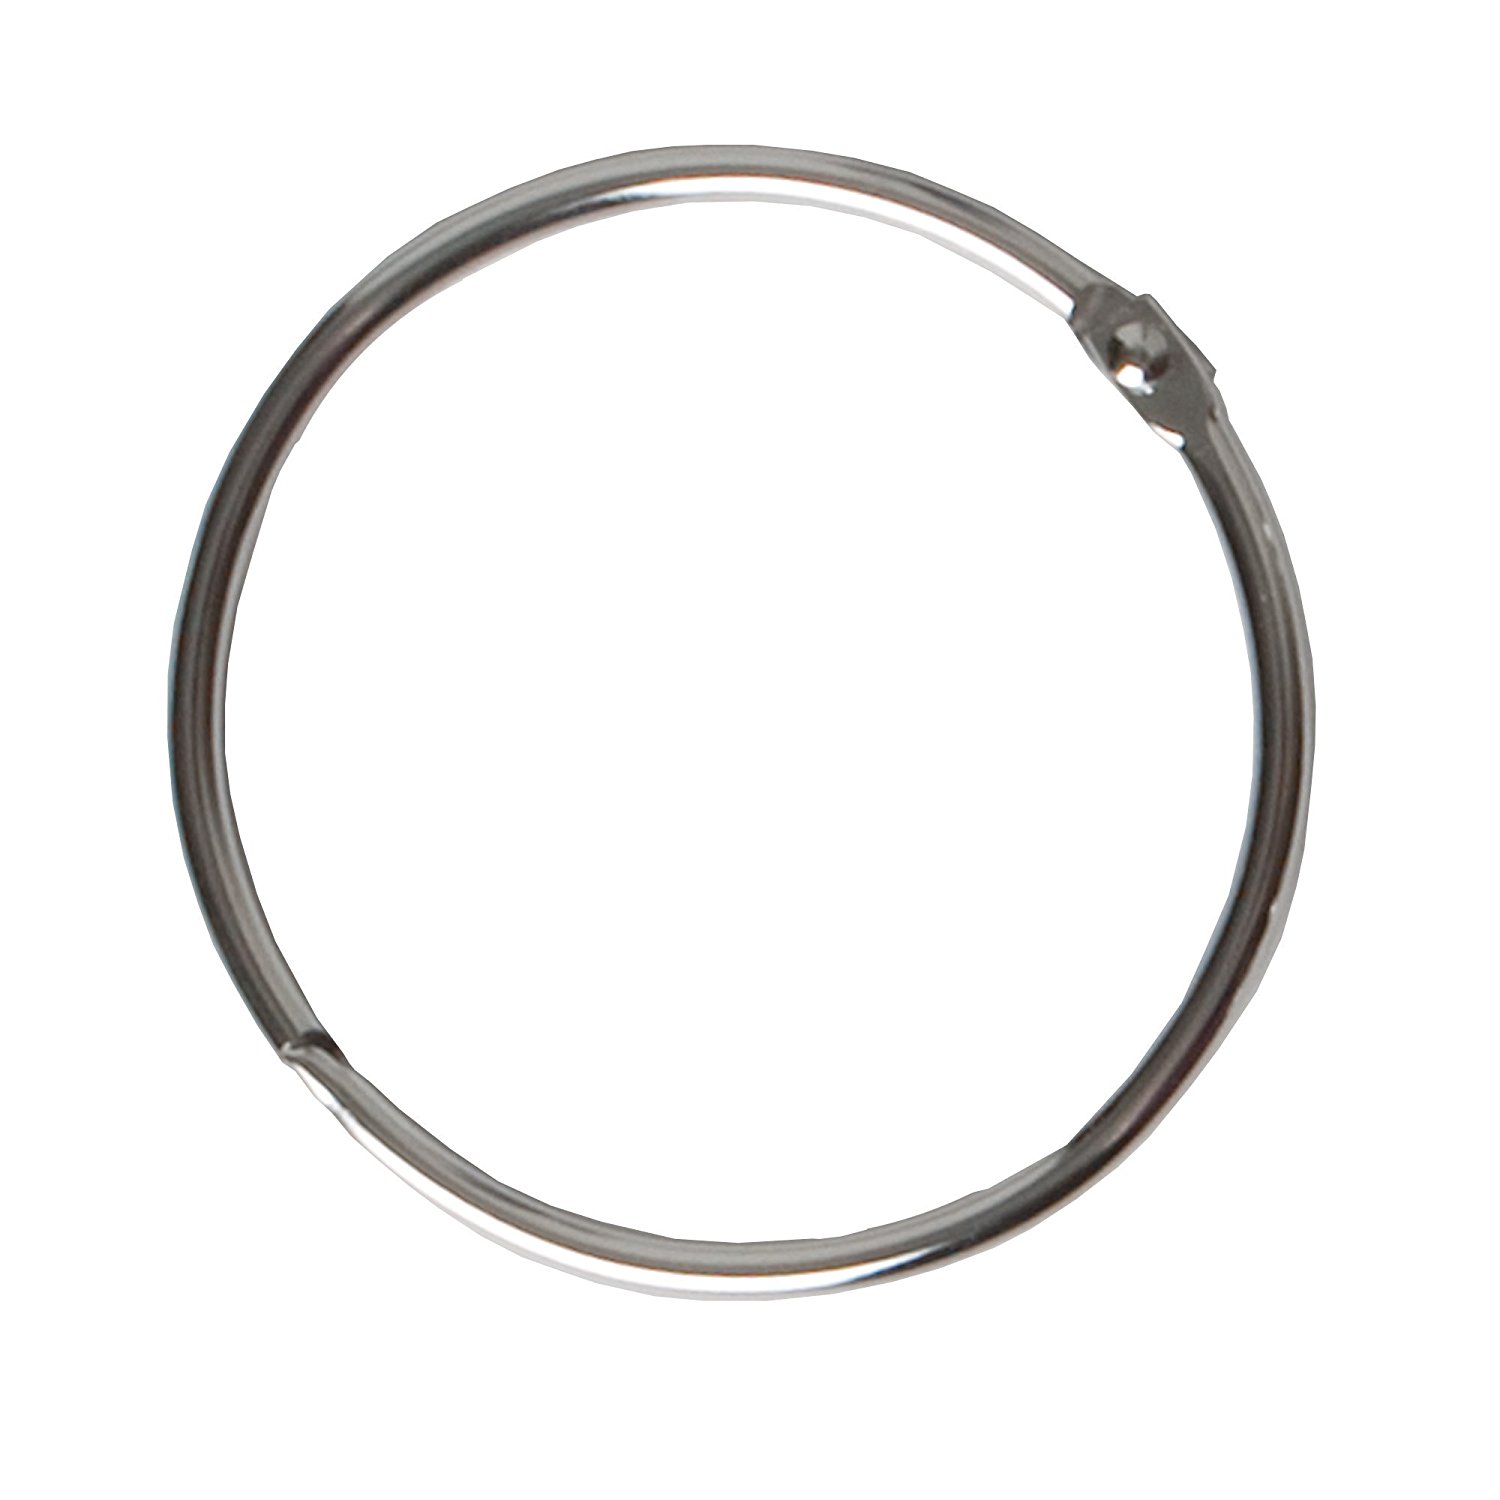 Amazon.com: Maytex Metal Circular Shower Ring, Chrome, Set of 12 ...